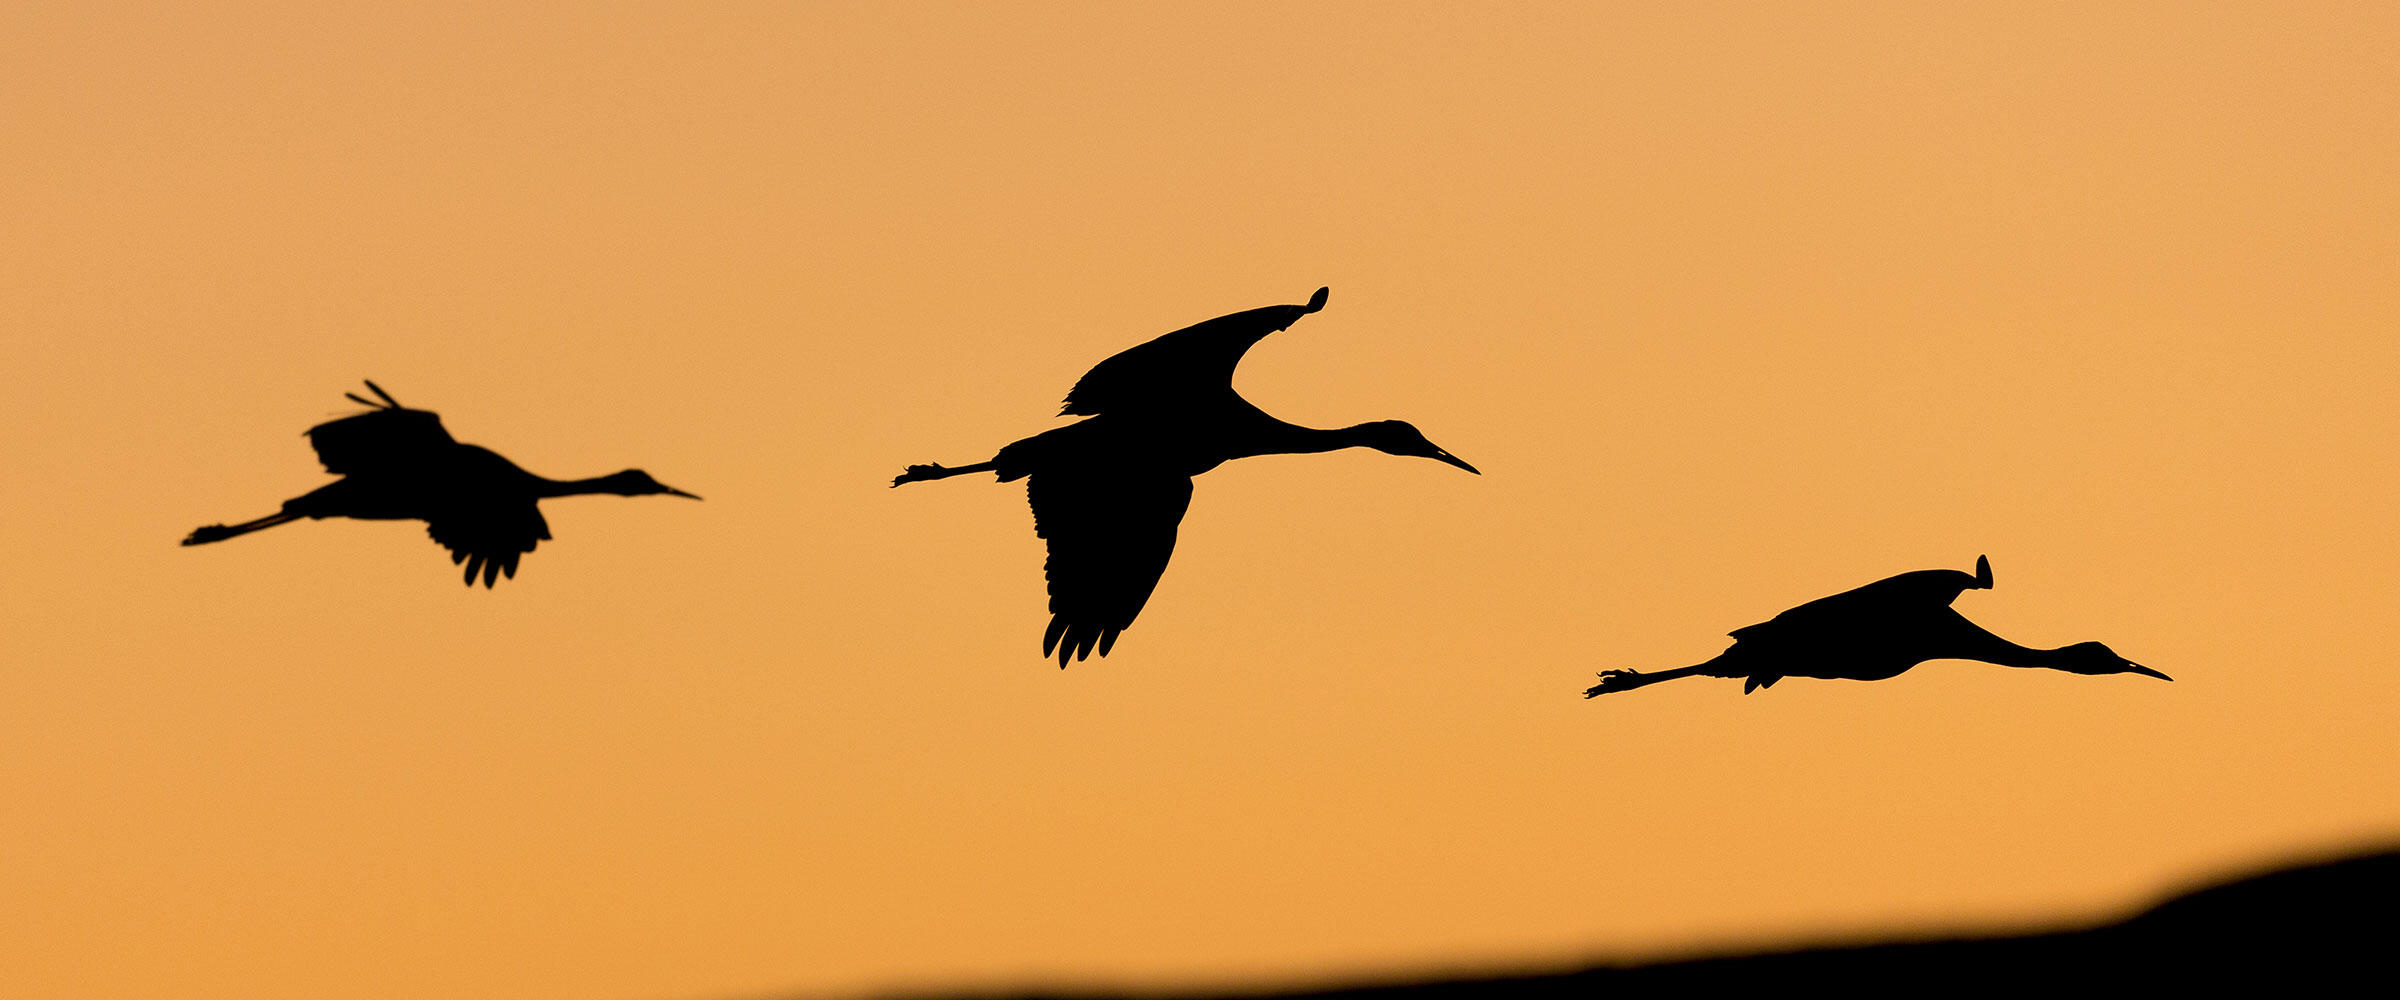 Sandhill Cranes in flight, silhouetted.